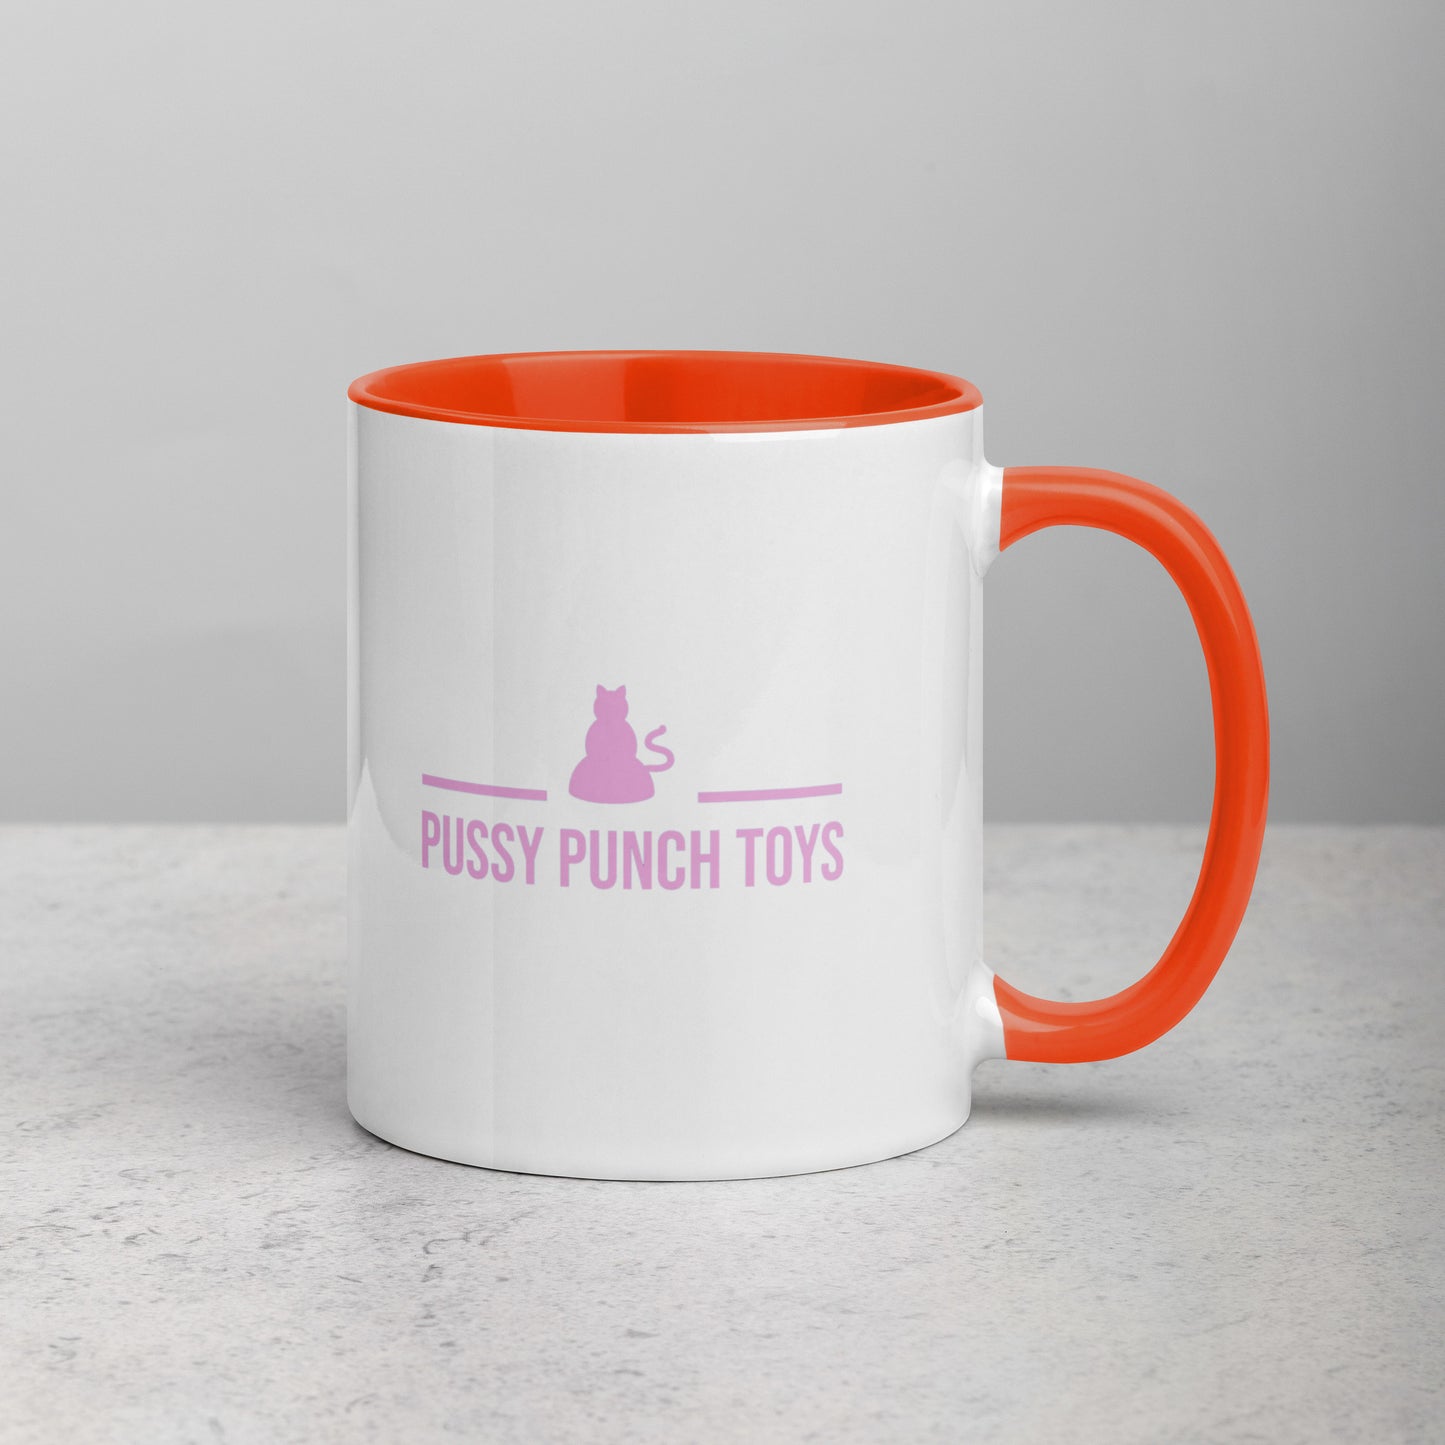 Pussy Punch Mug